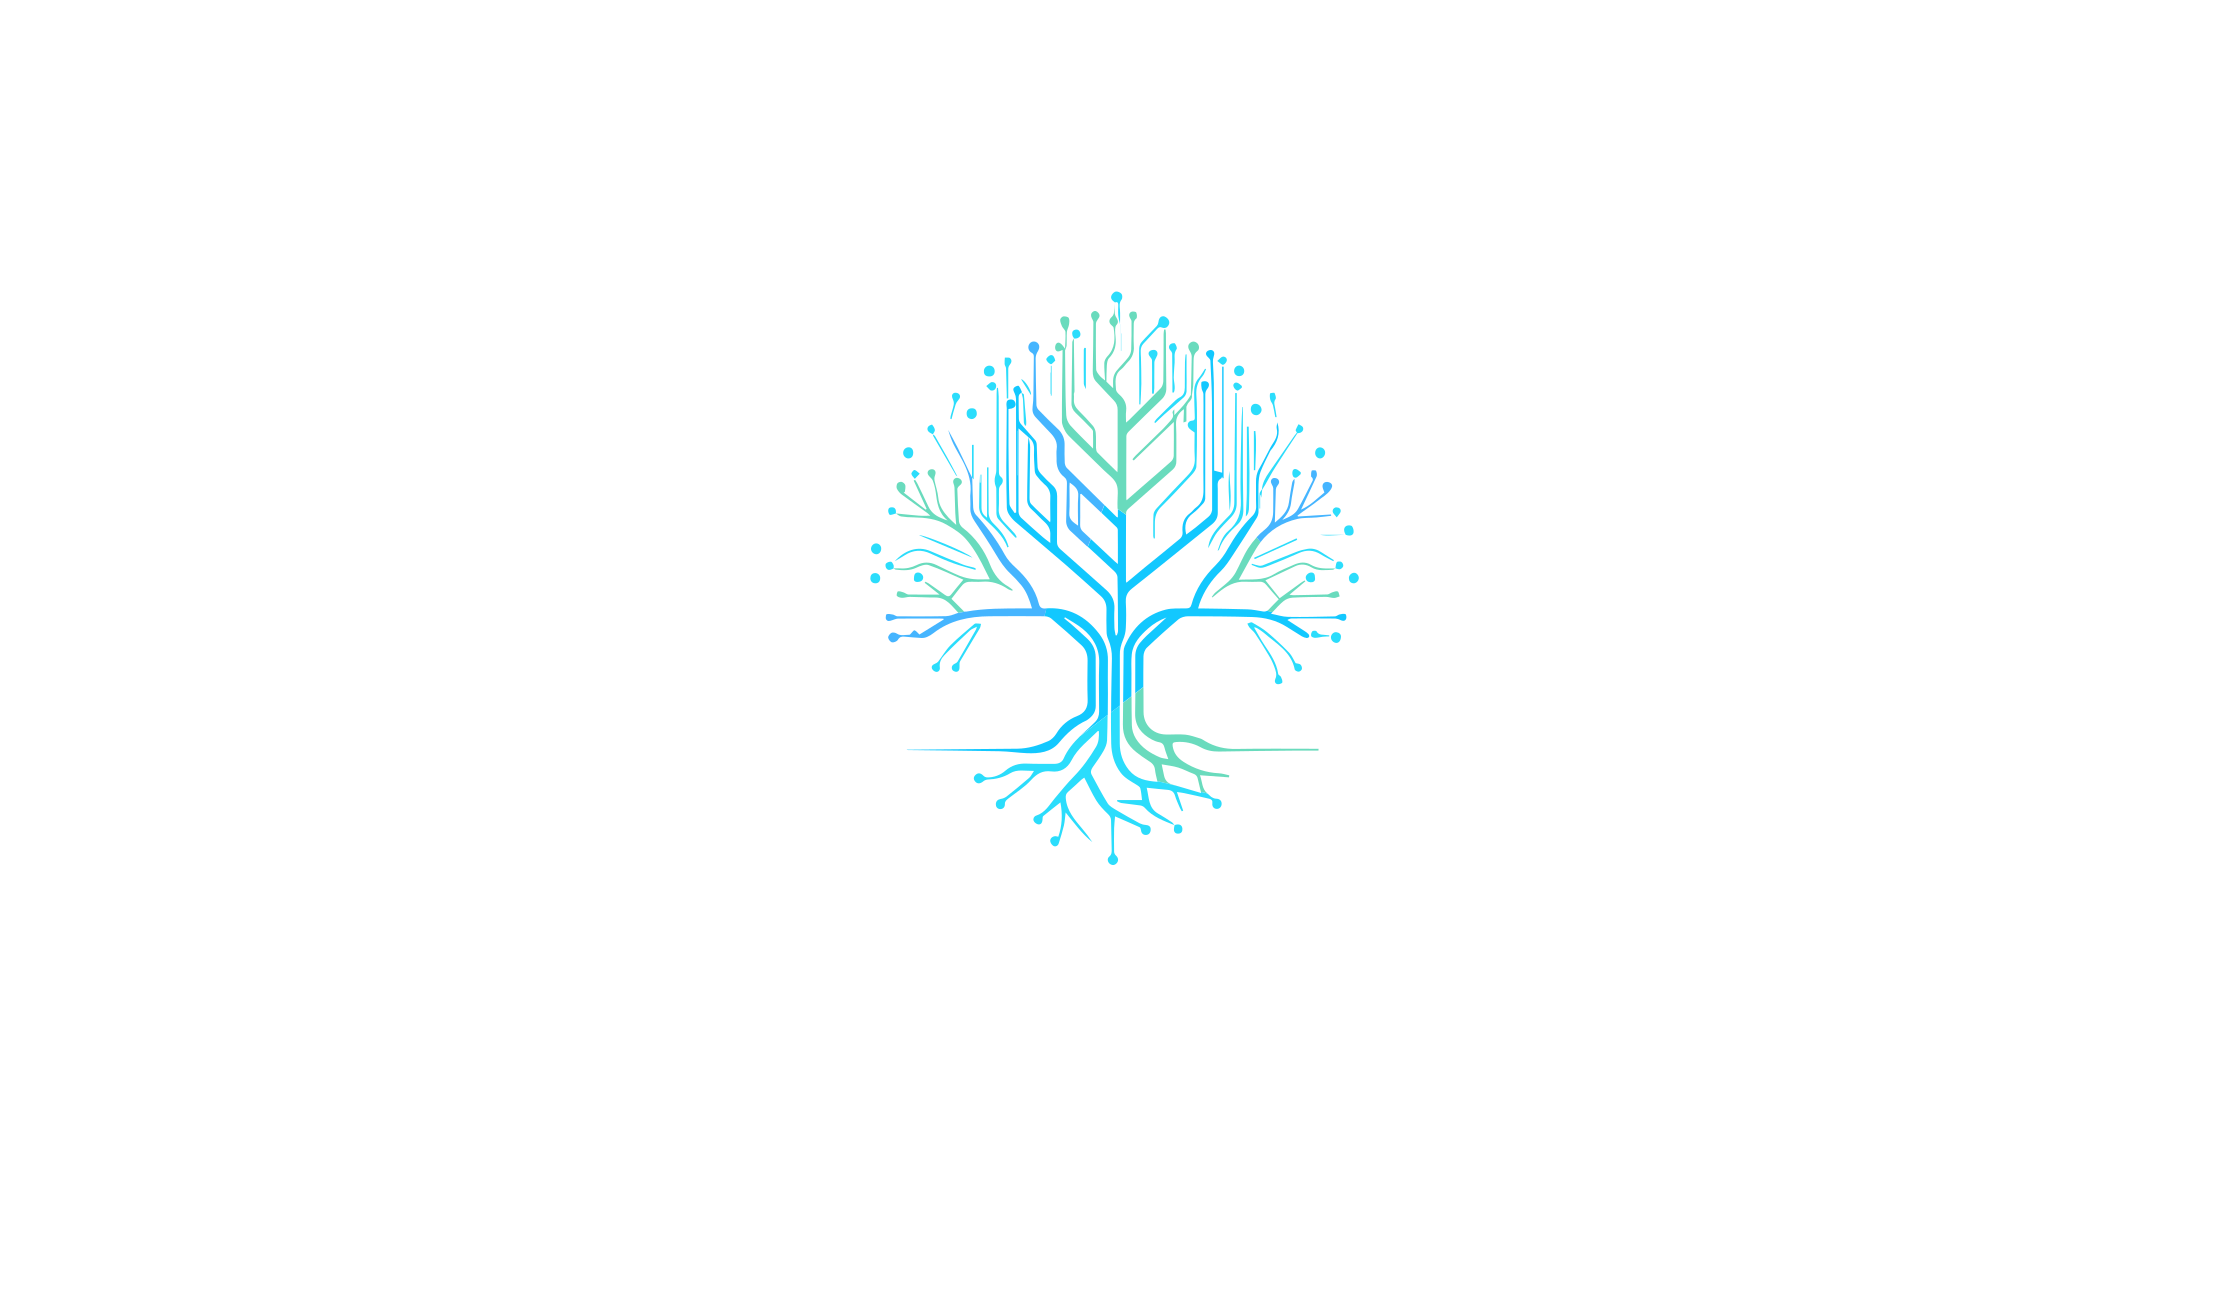 Hritz Web Services logo featuring a data tree.